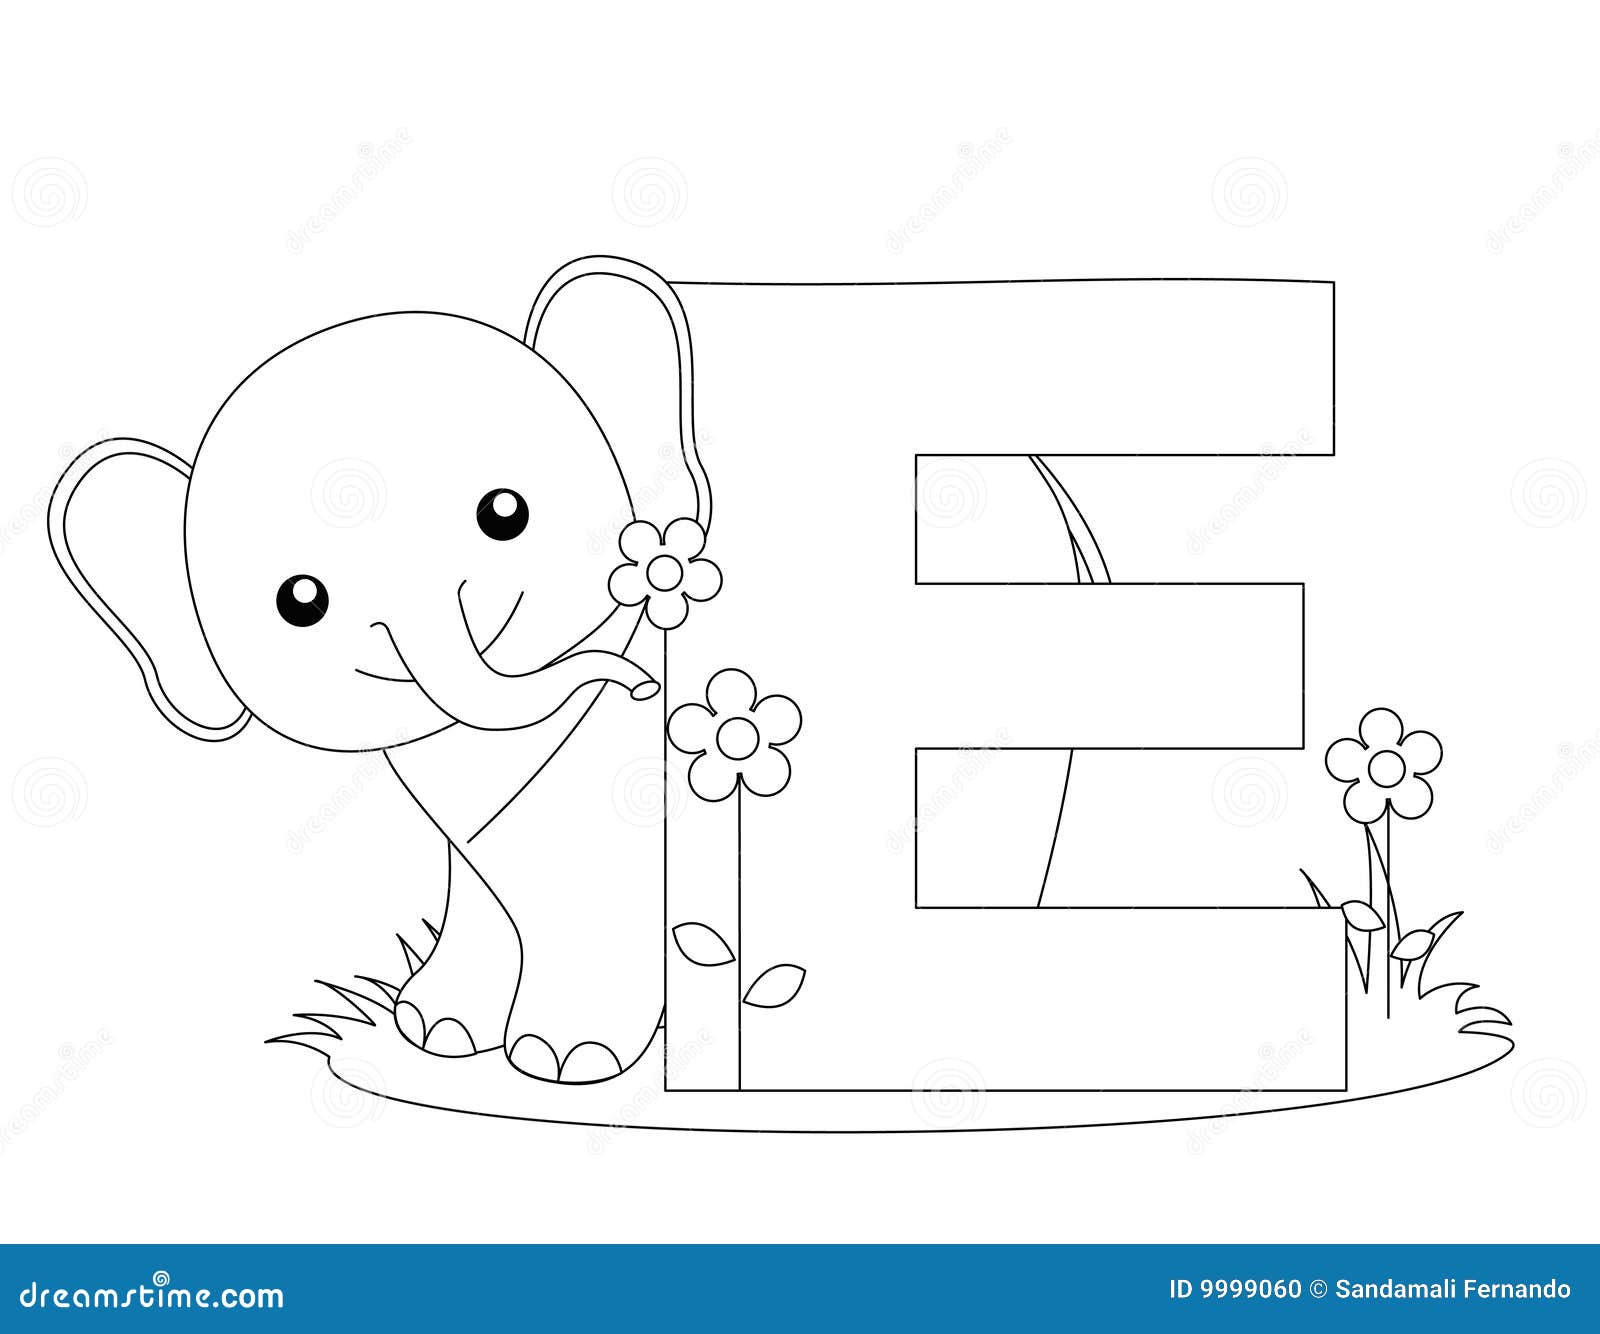 Animal alphabet e coloring page stock vector